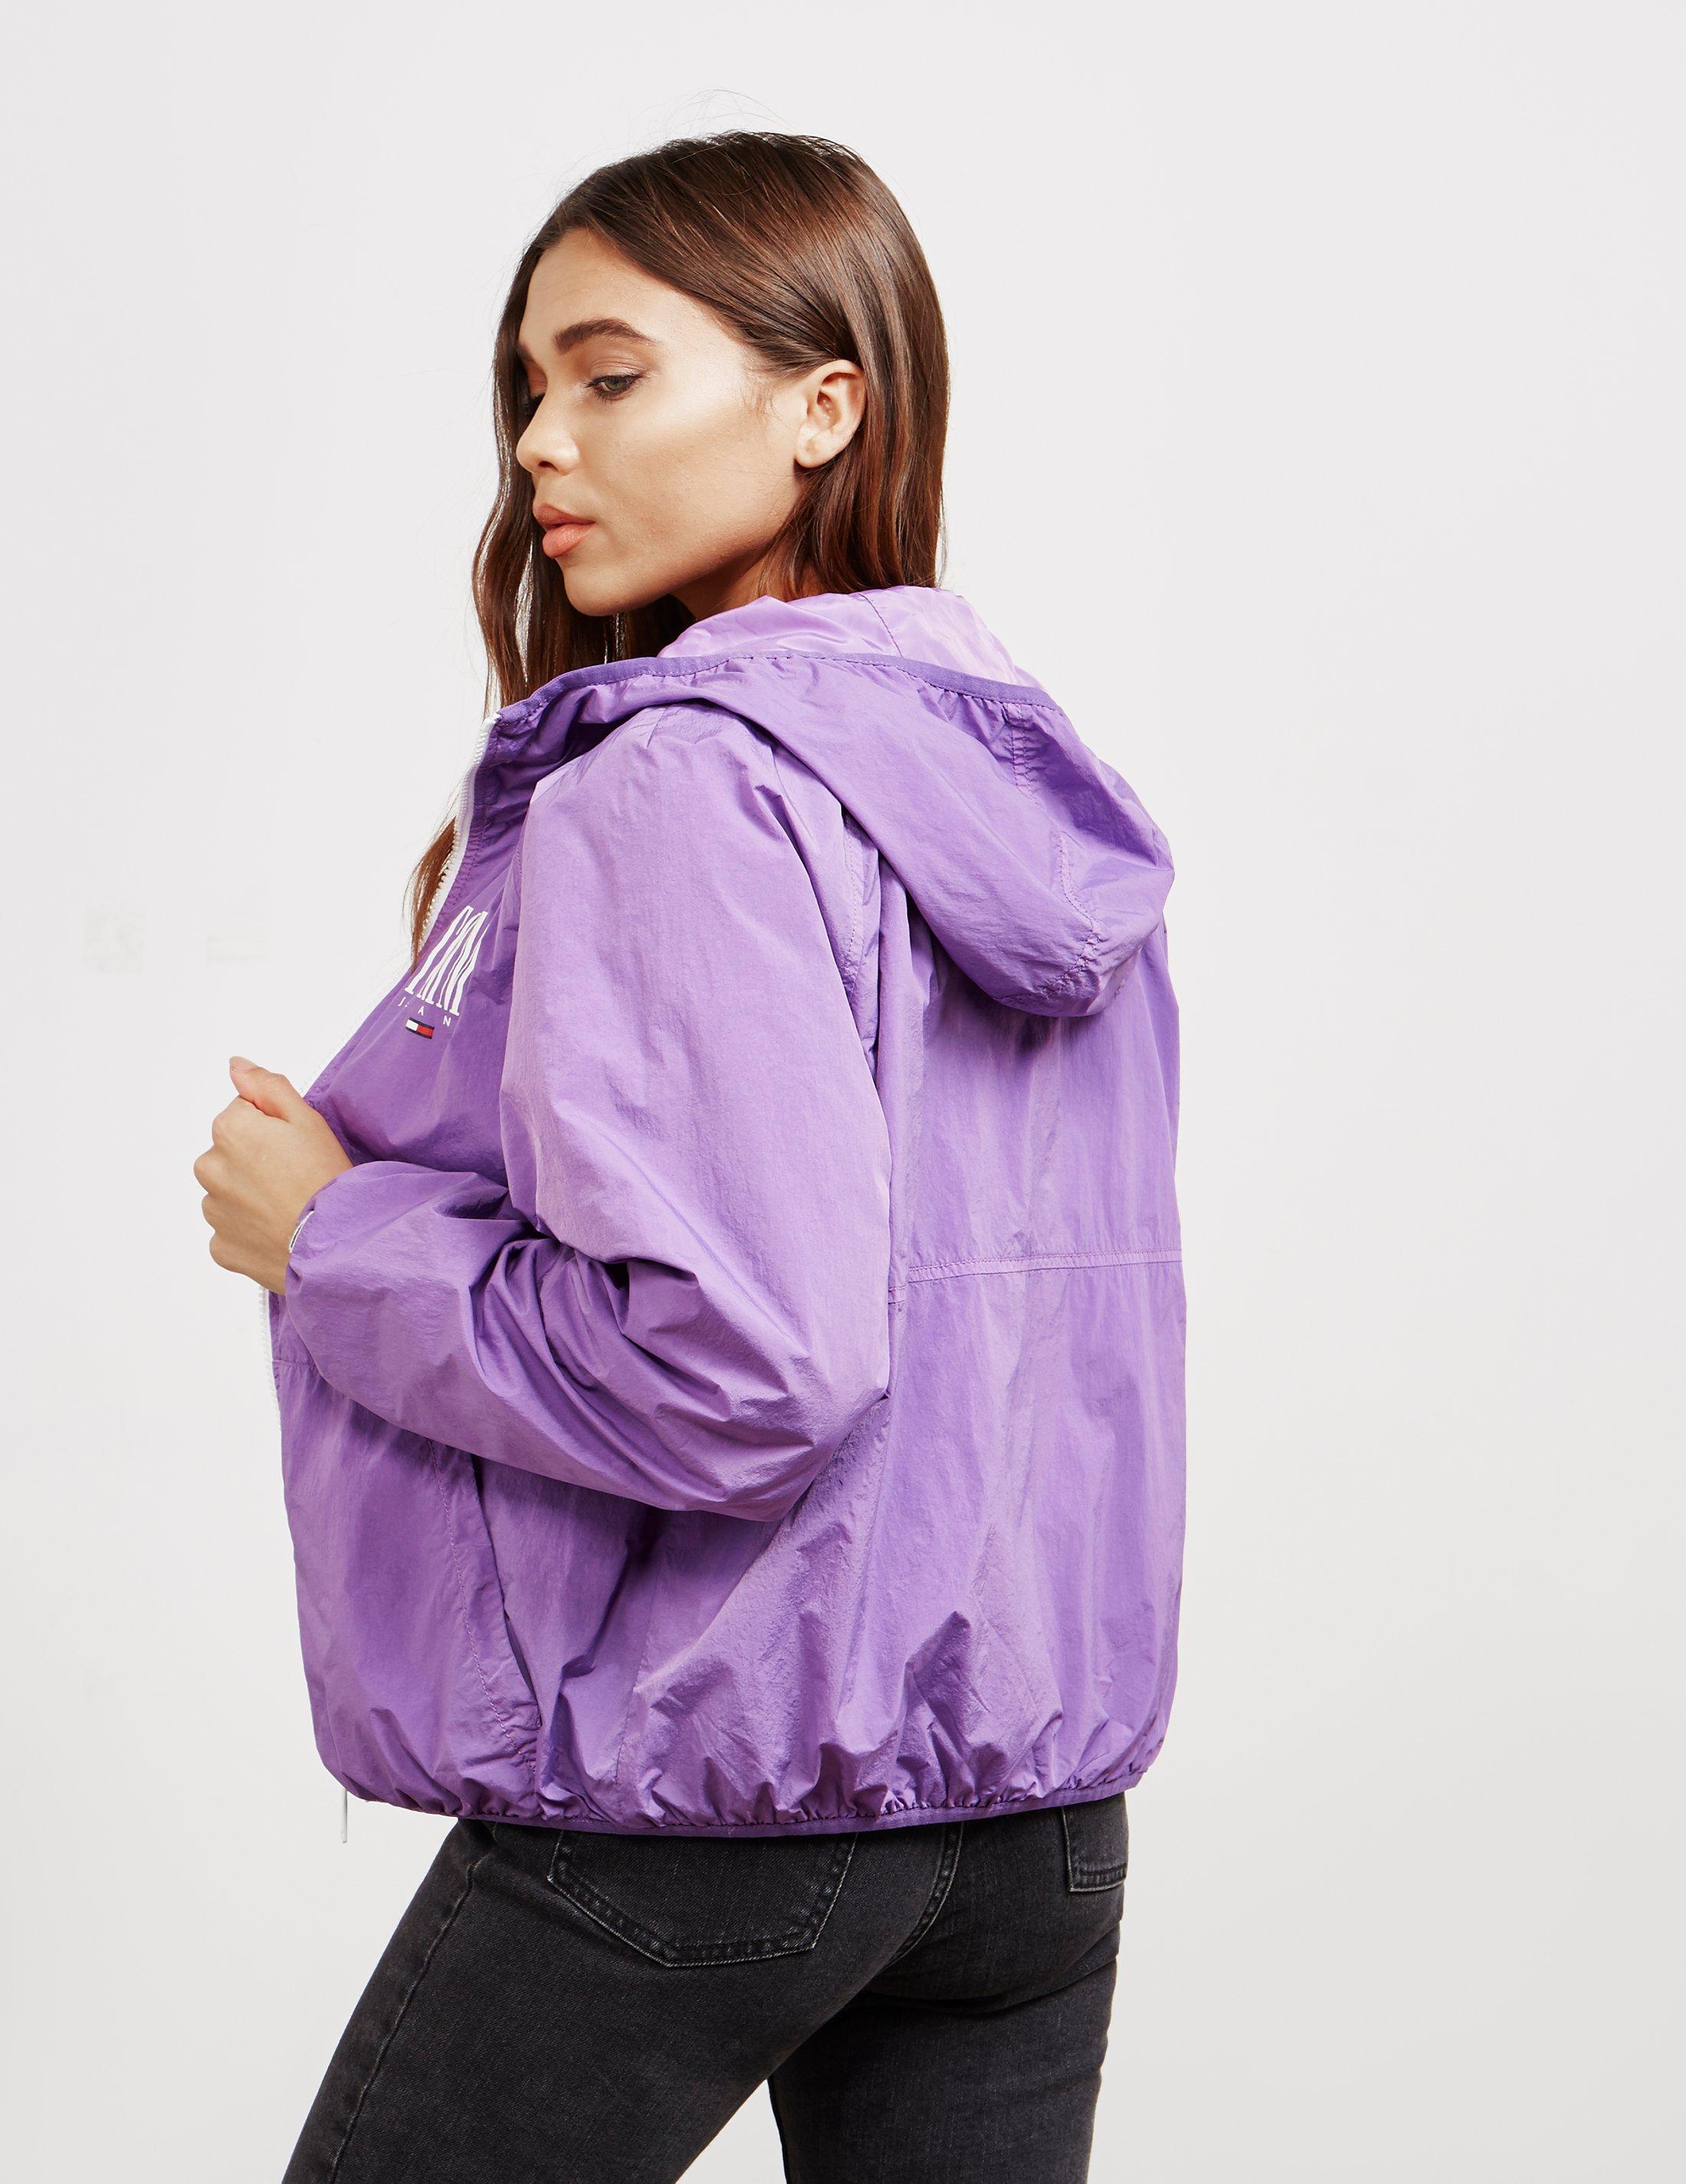 tommy hilfiger purple jacket